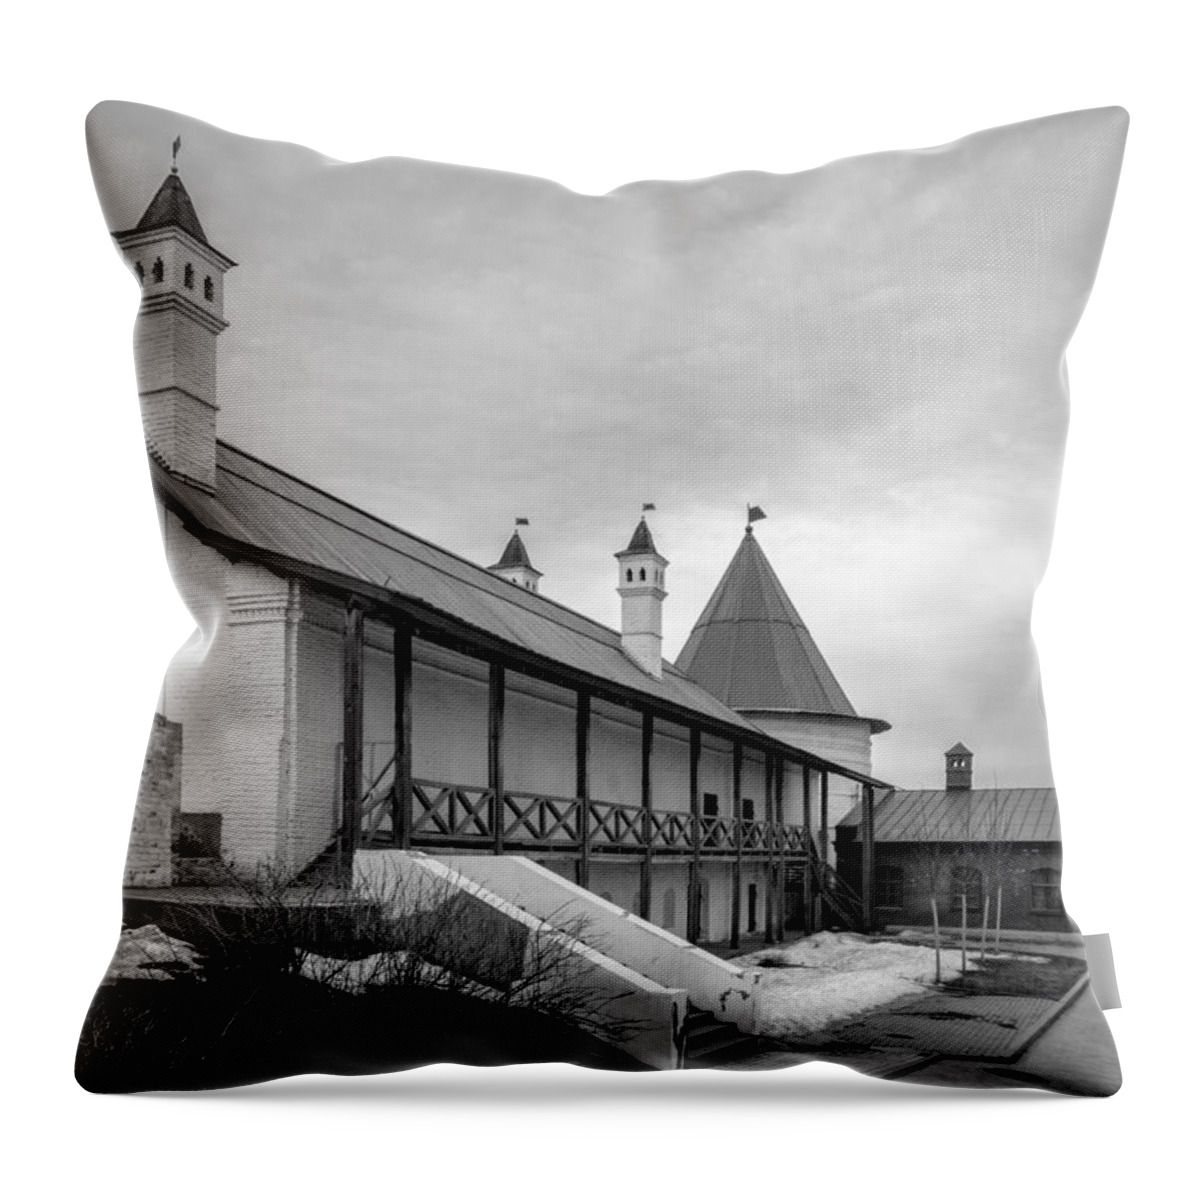 Kazan Throw Pillow featuring the photograph Kazan Kremlin by Alexey Stiop